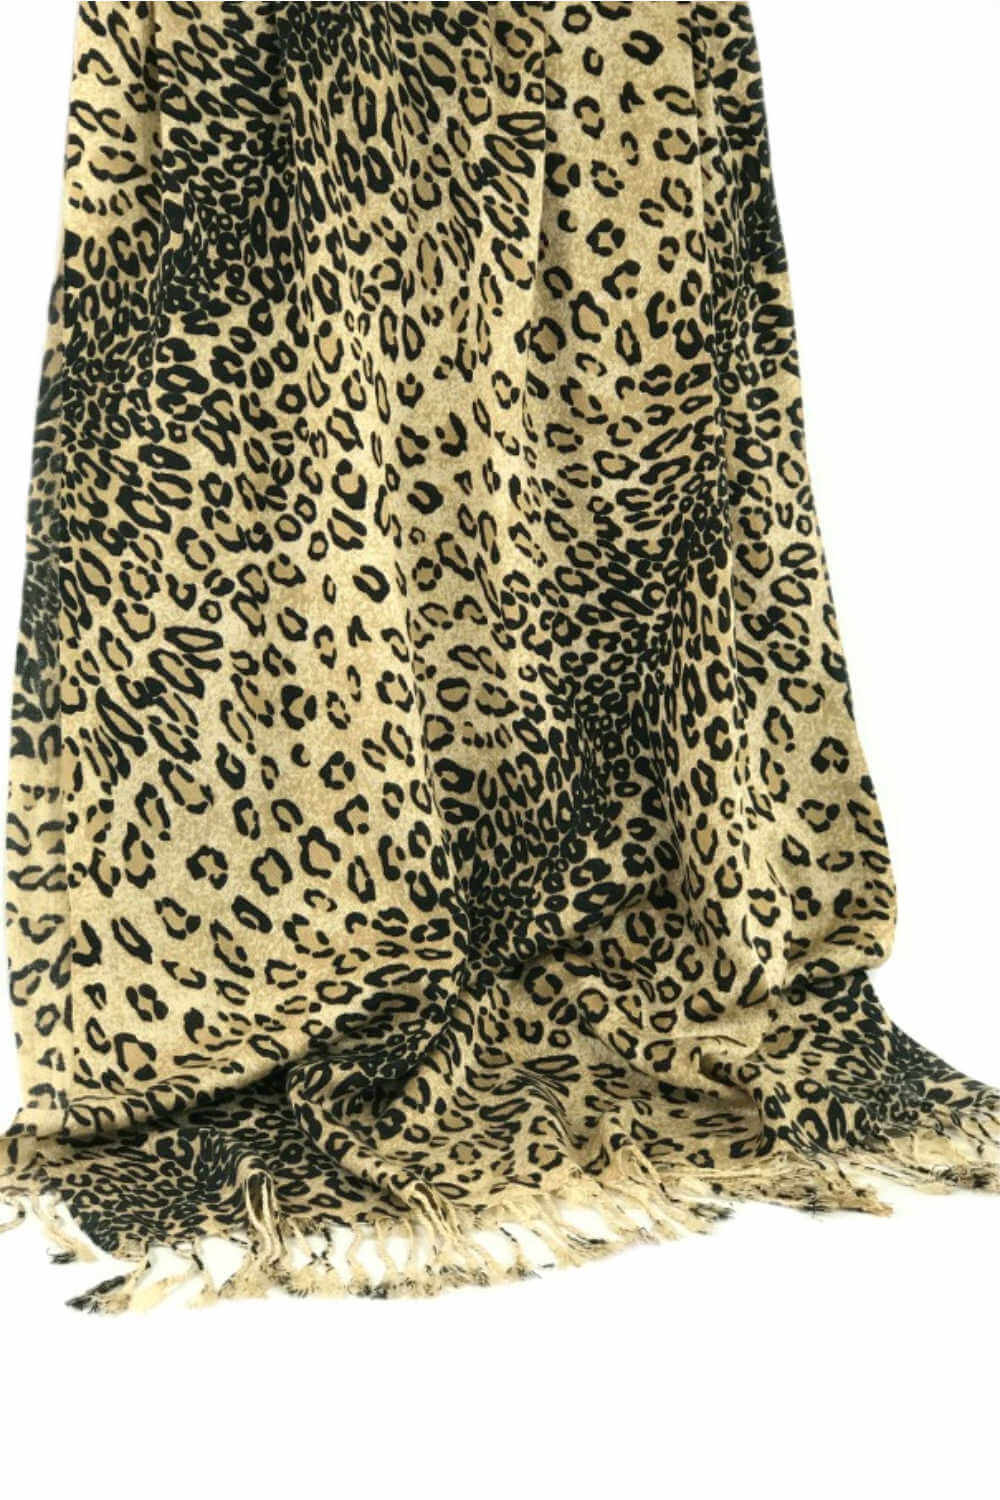 Leopard Print Shawl Wrap